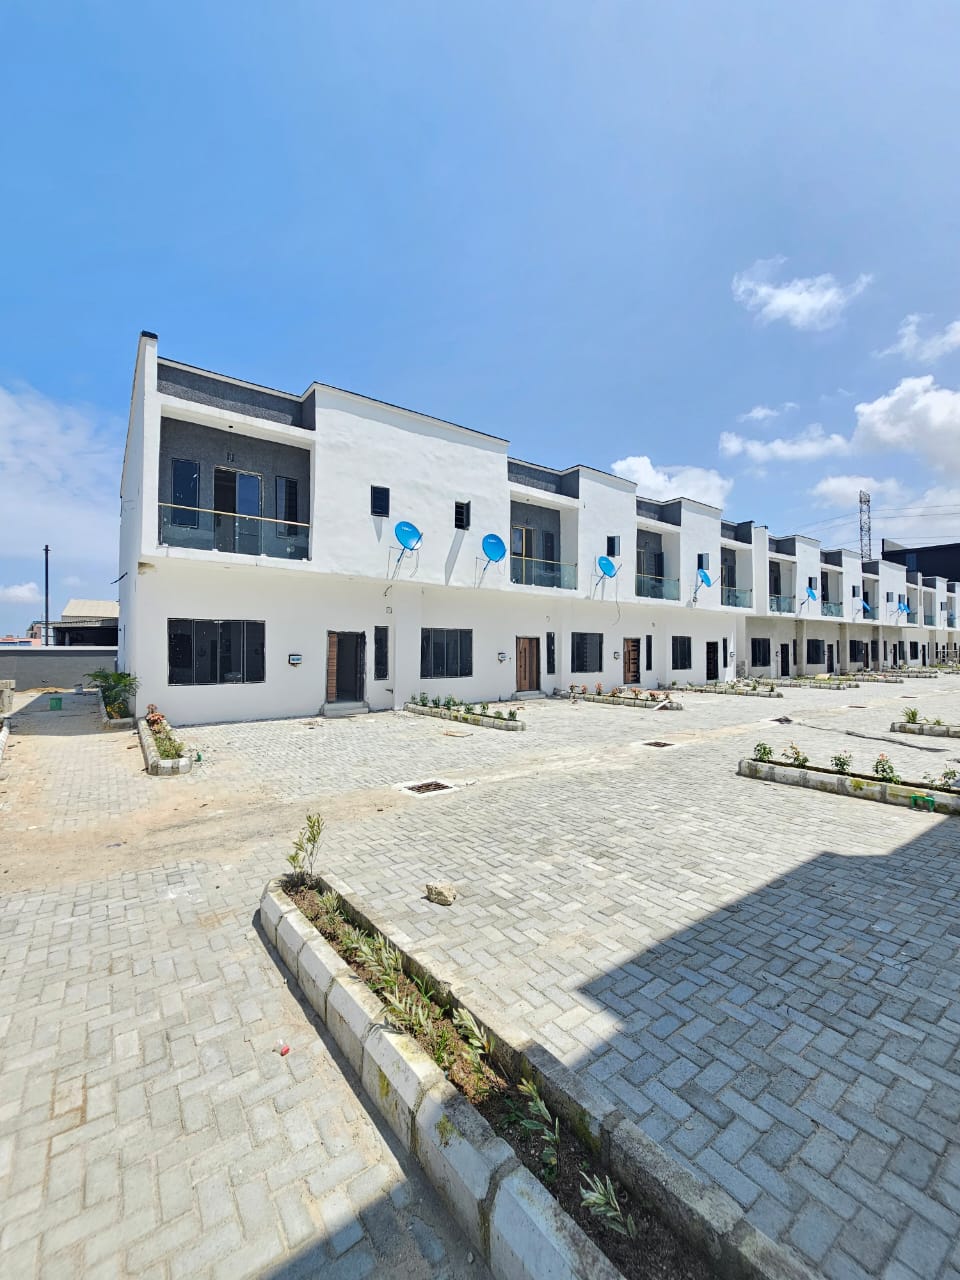 3bedrooms, Terrace Duplex, Ologolo, Lekki, Lagos State